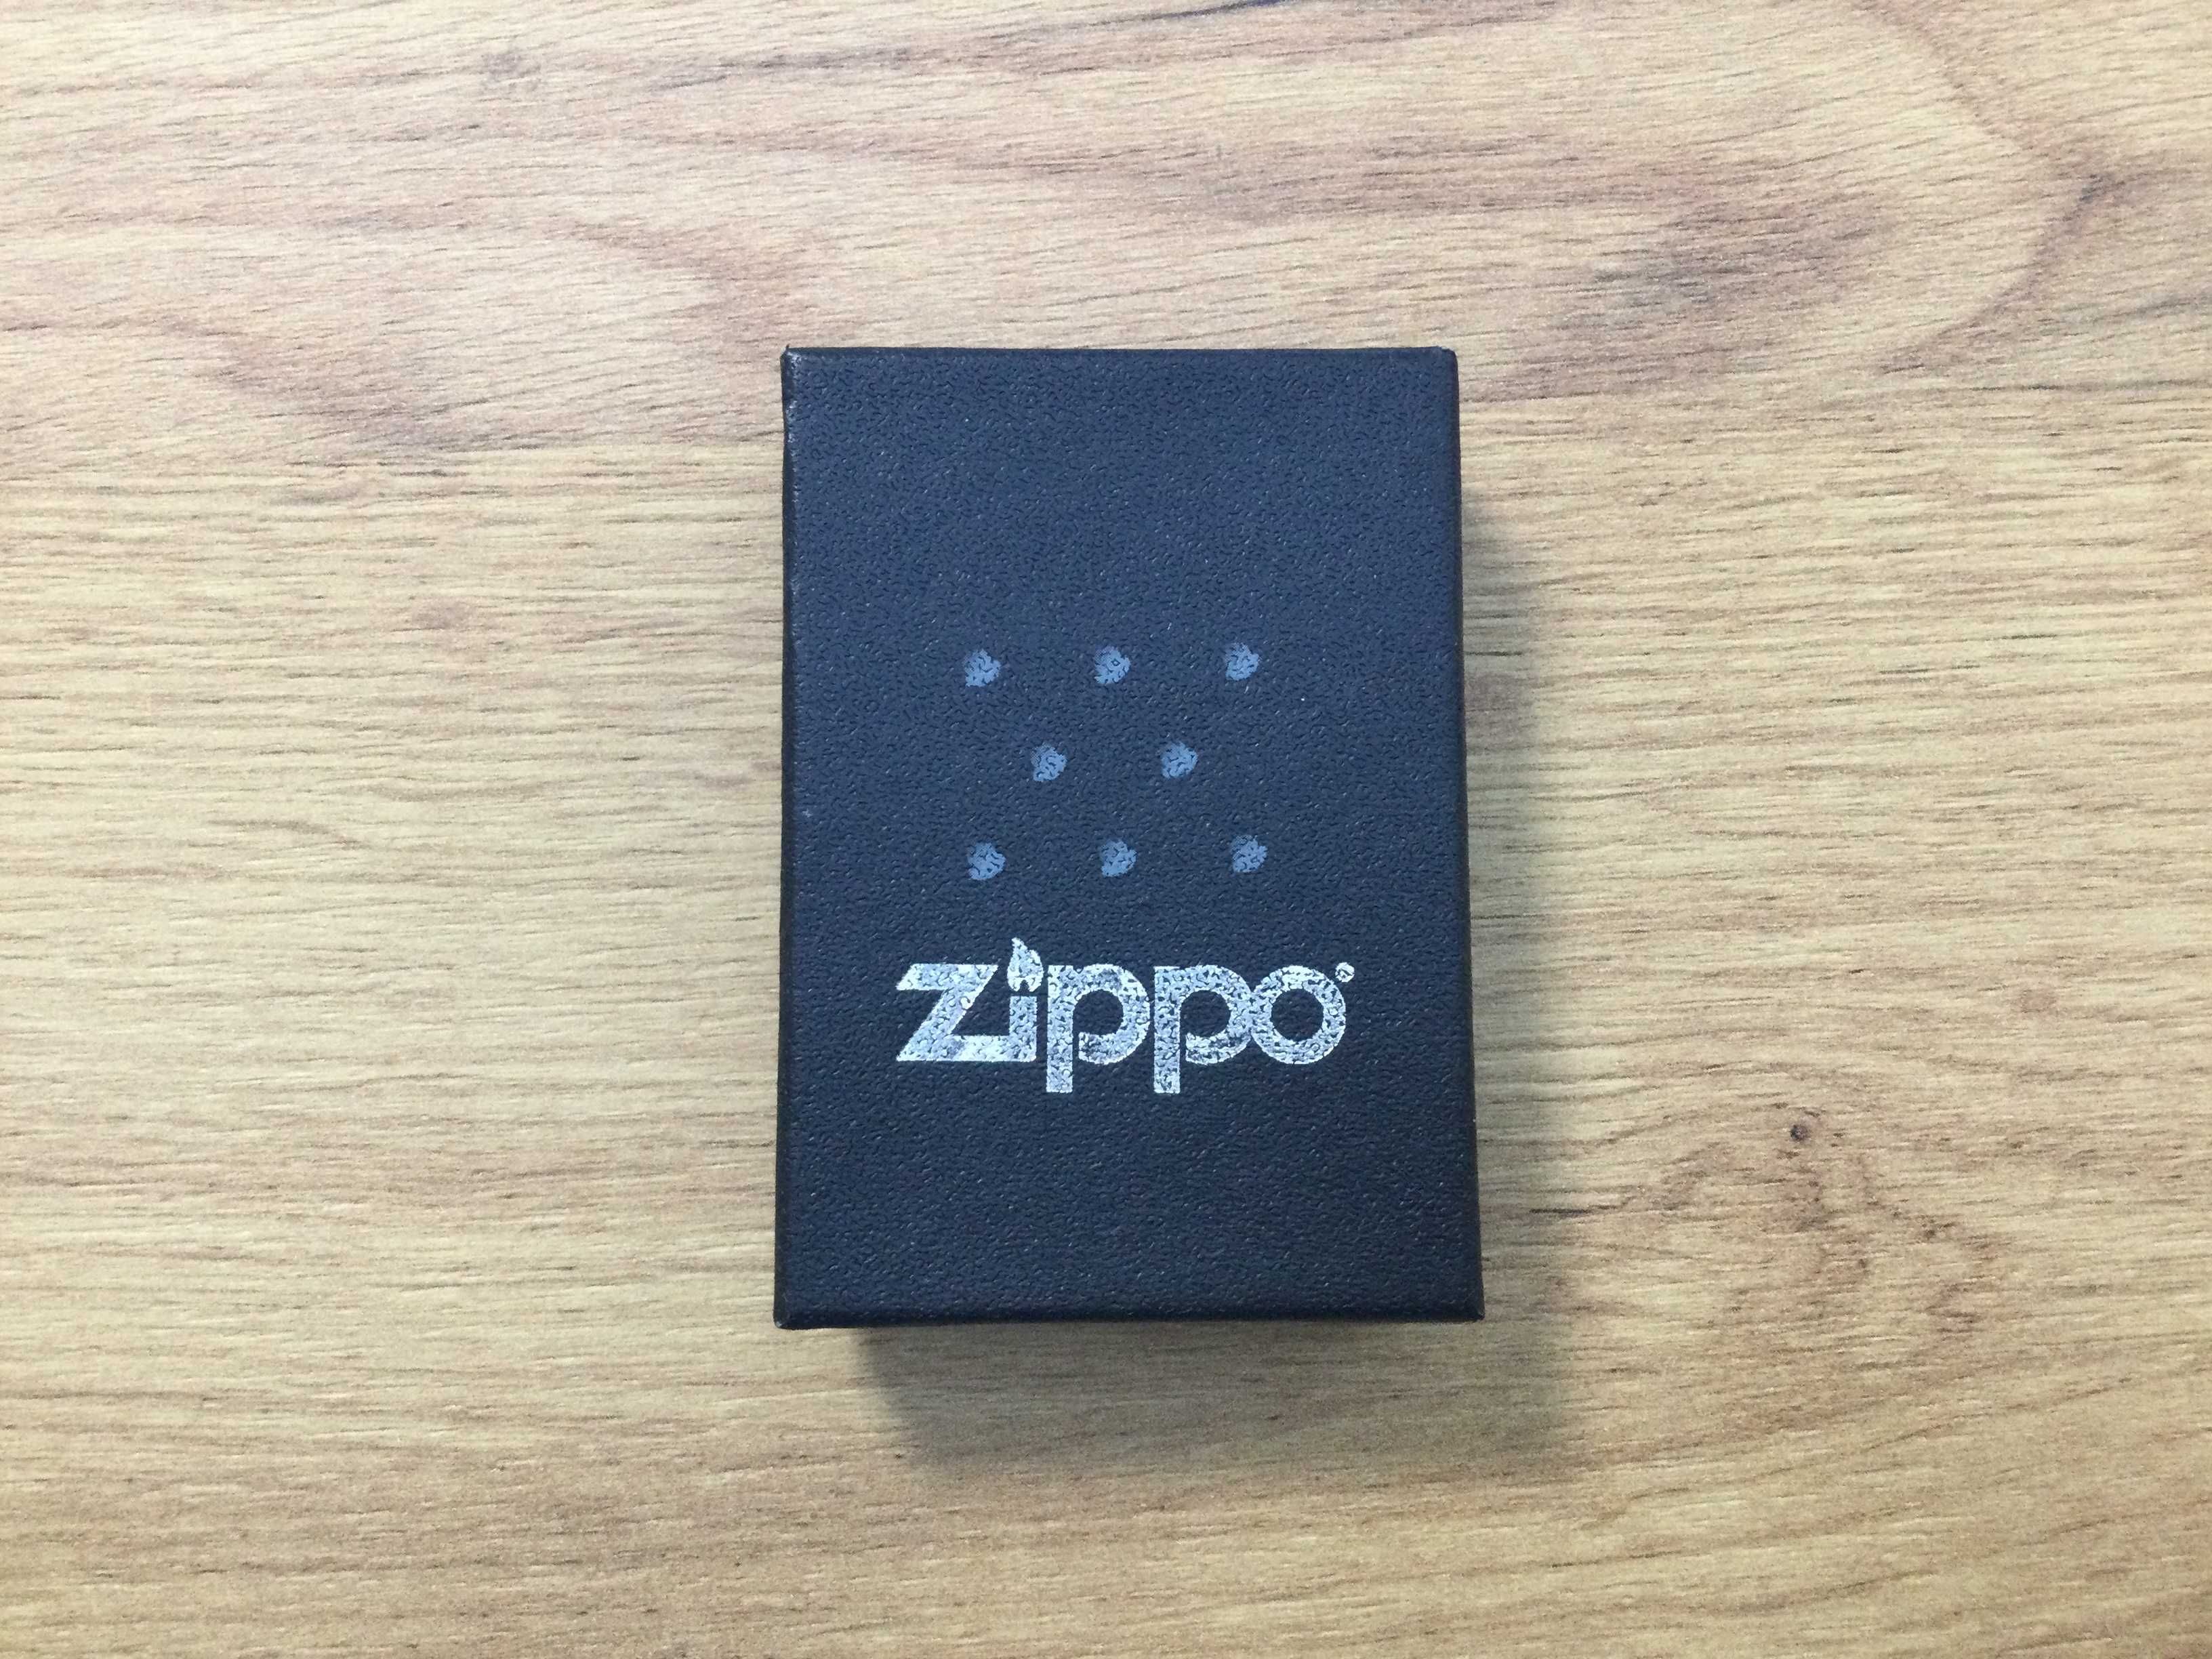 Новая зажигалка Zippo Stamp Street Chrome 21193